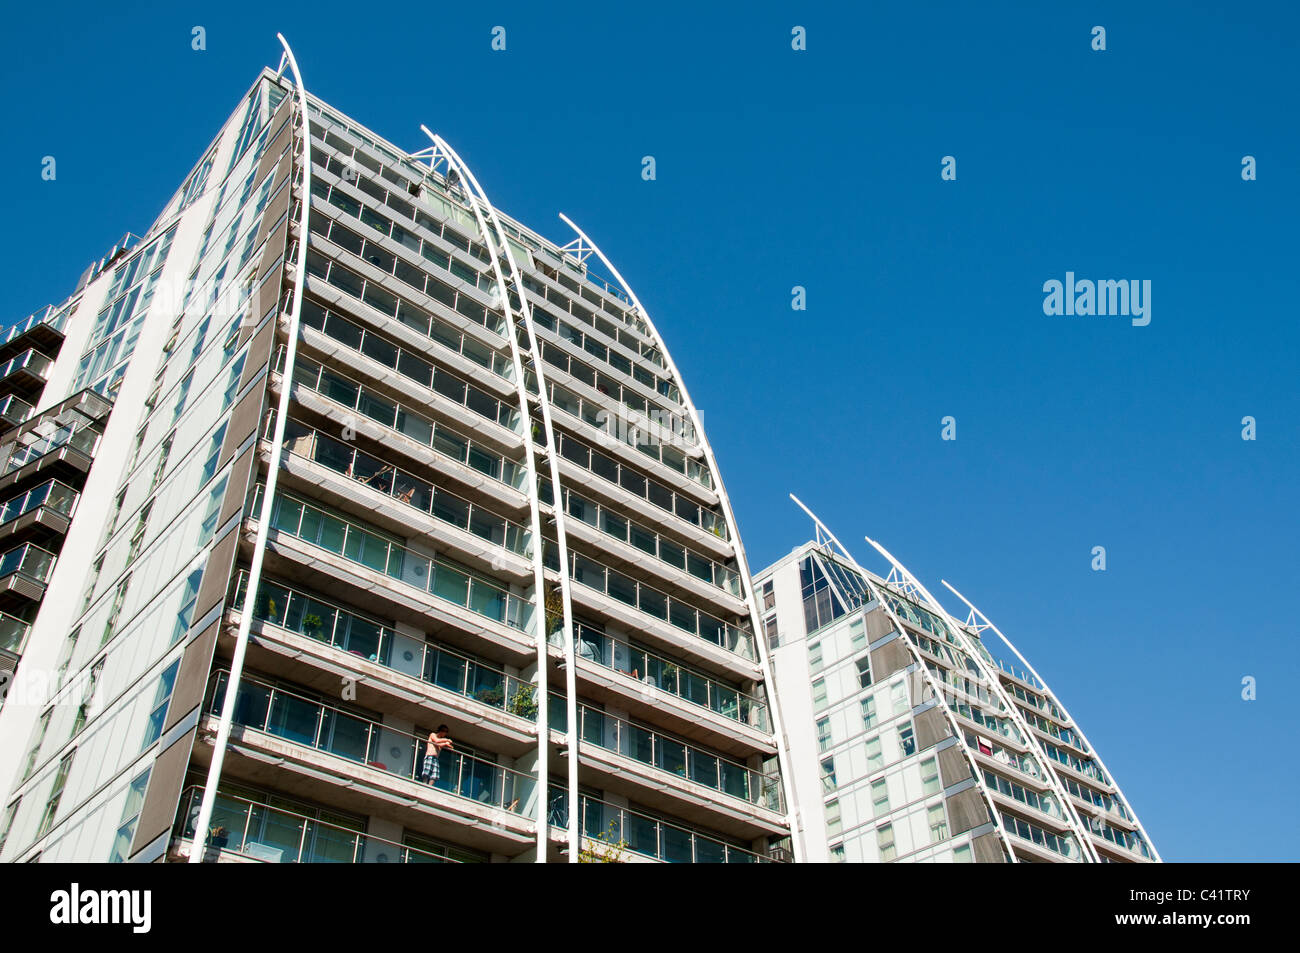 Les blocs d'appartements Bâtiments NV, bassin du Huron, Salford Quays, Greater Manchester, Angleterre, RU Banque D'Images